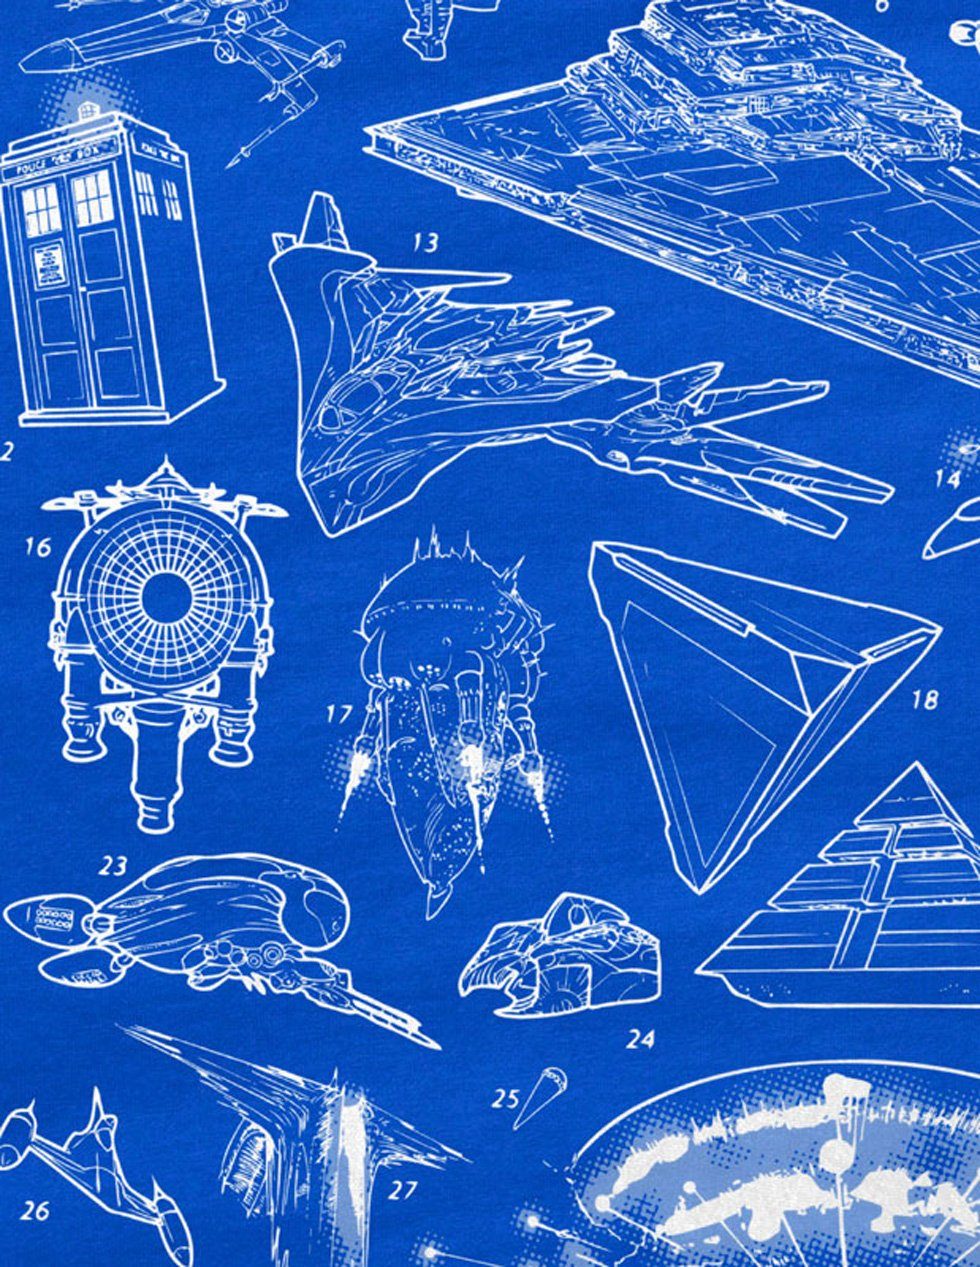 T-Shirt style3 Print-Shirt Ships T4RD1S sci-fi Viper Kinder Space blau